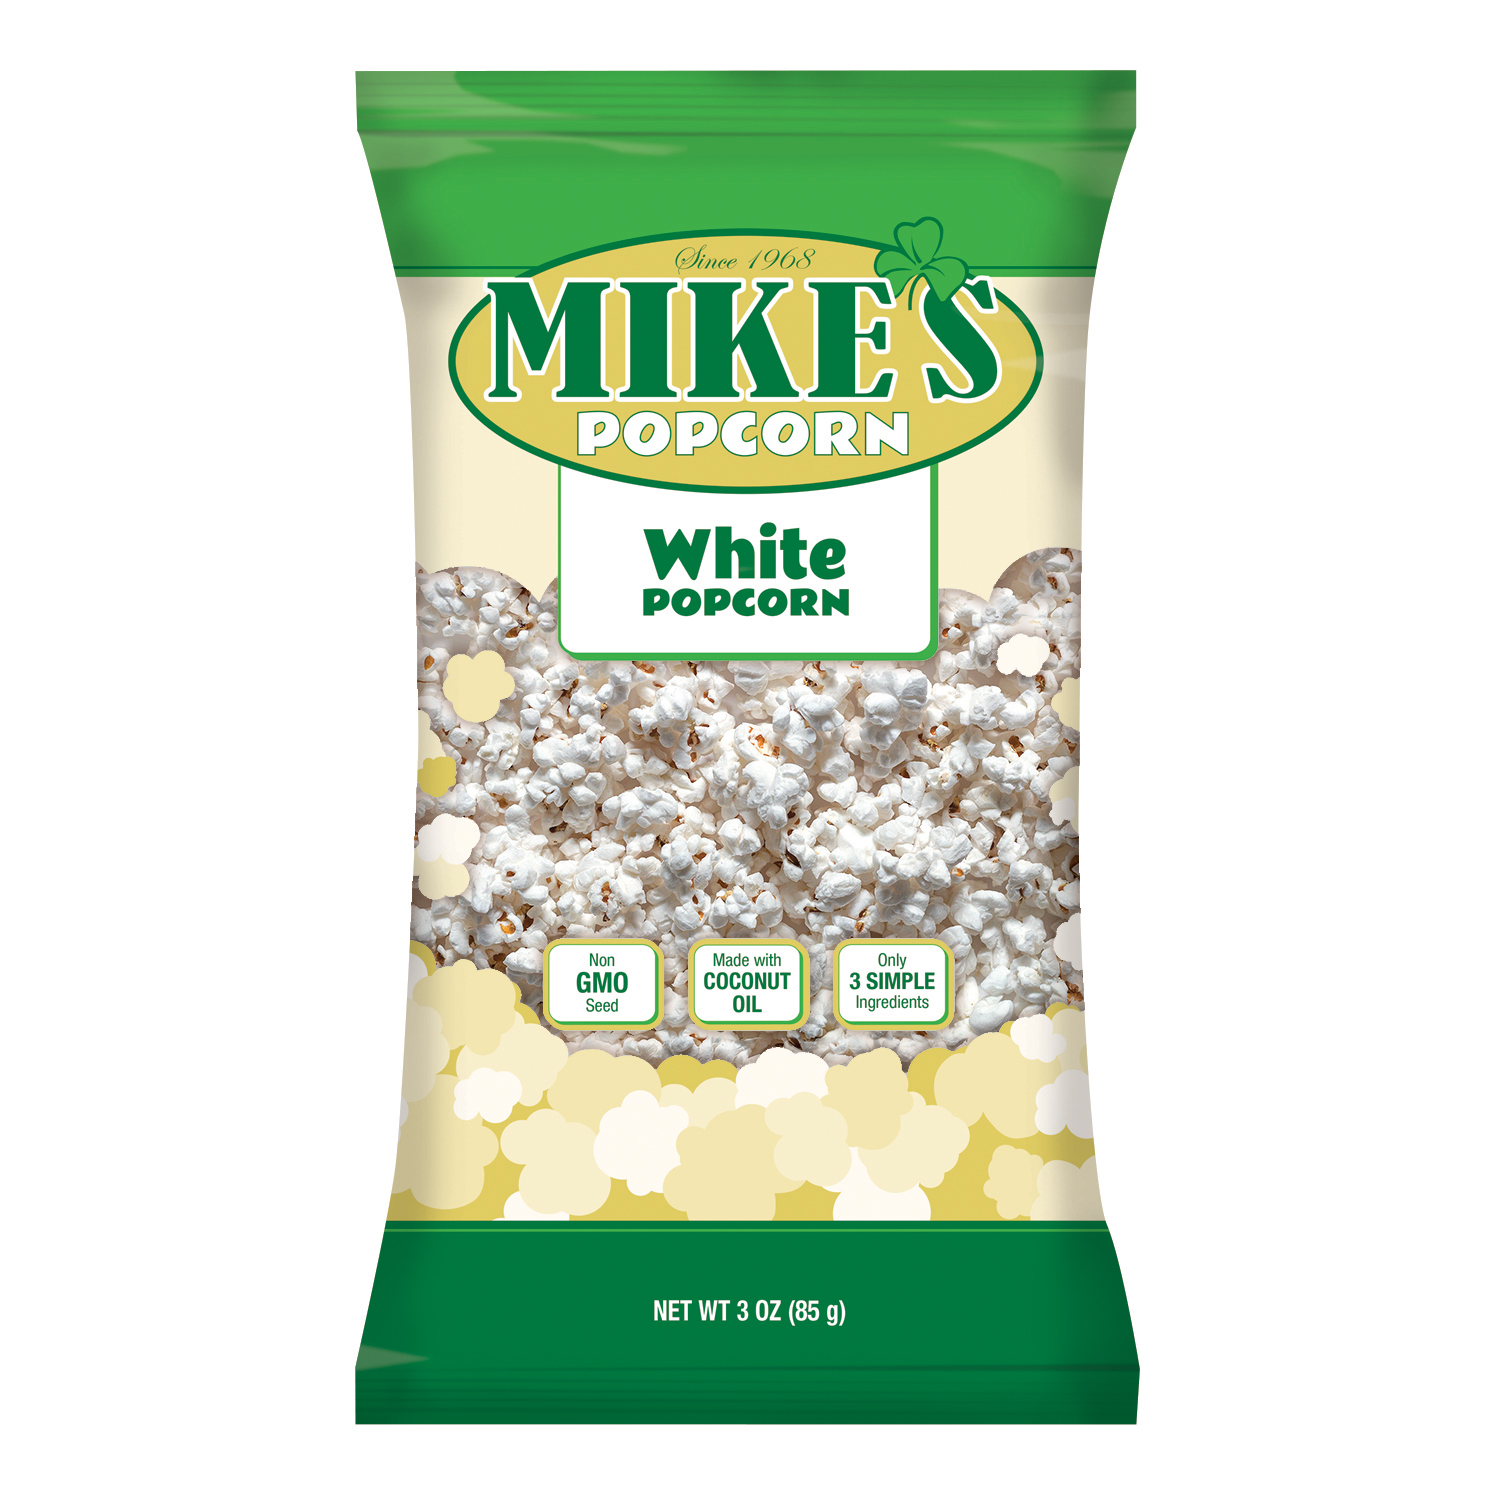 Mike's White Popcorn